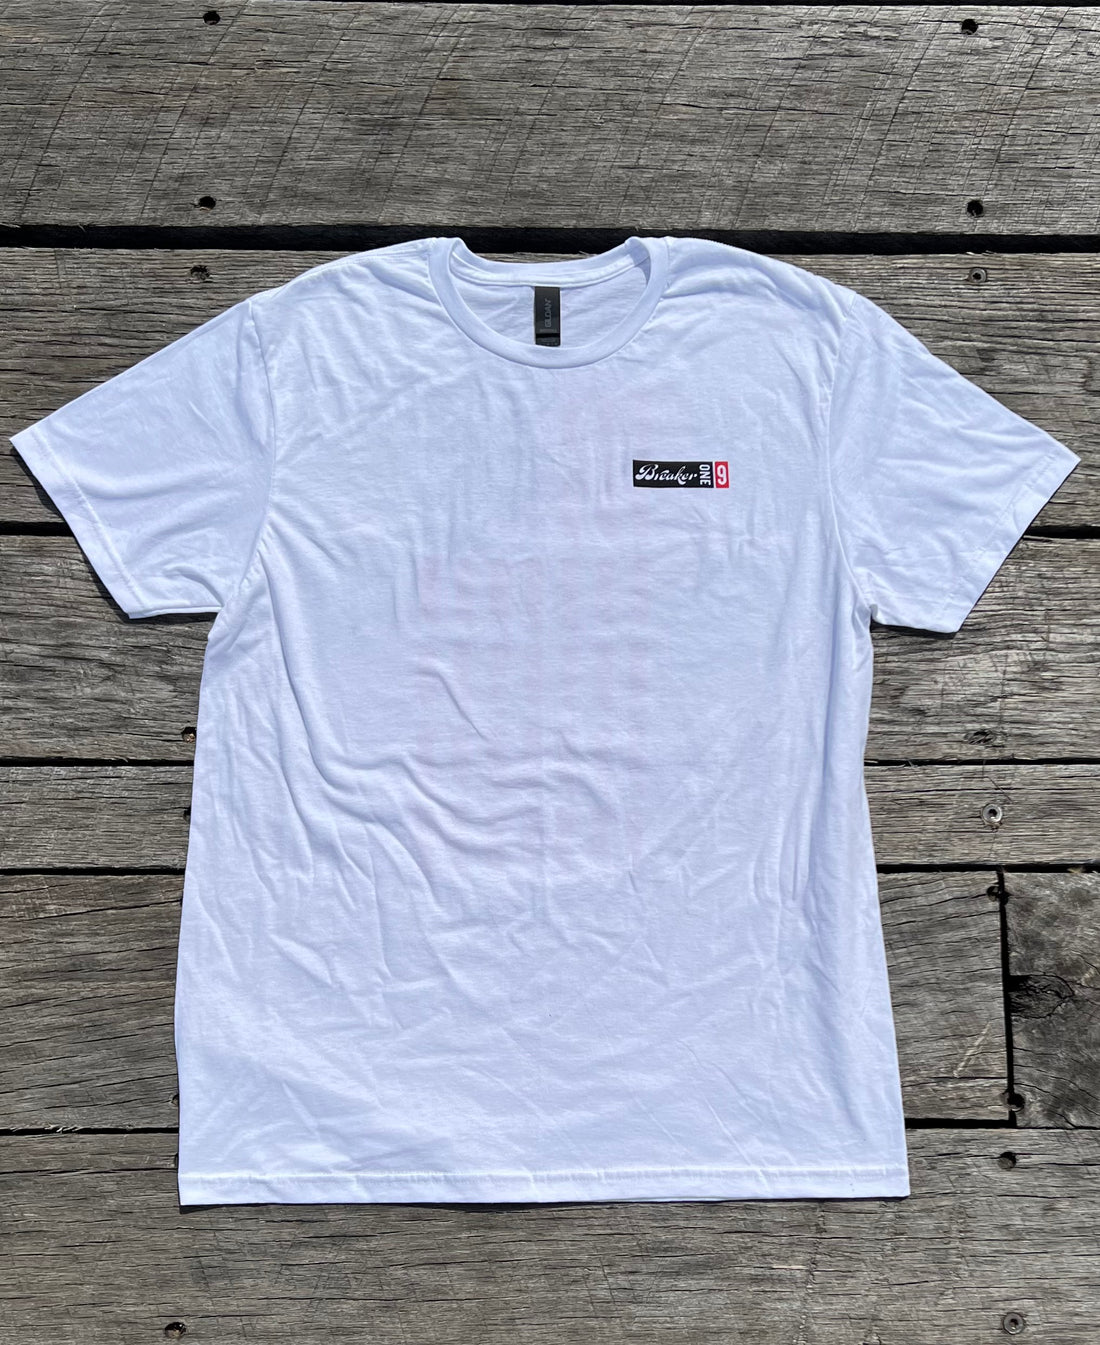 BreakerOne9 - USA Trucker Flag T-shirt - White